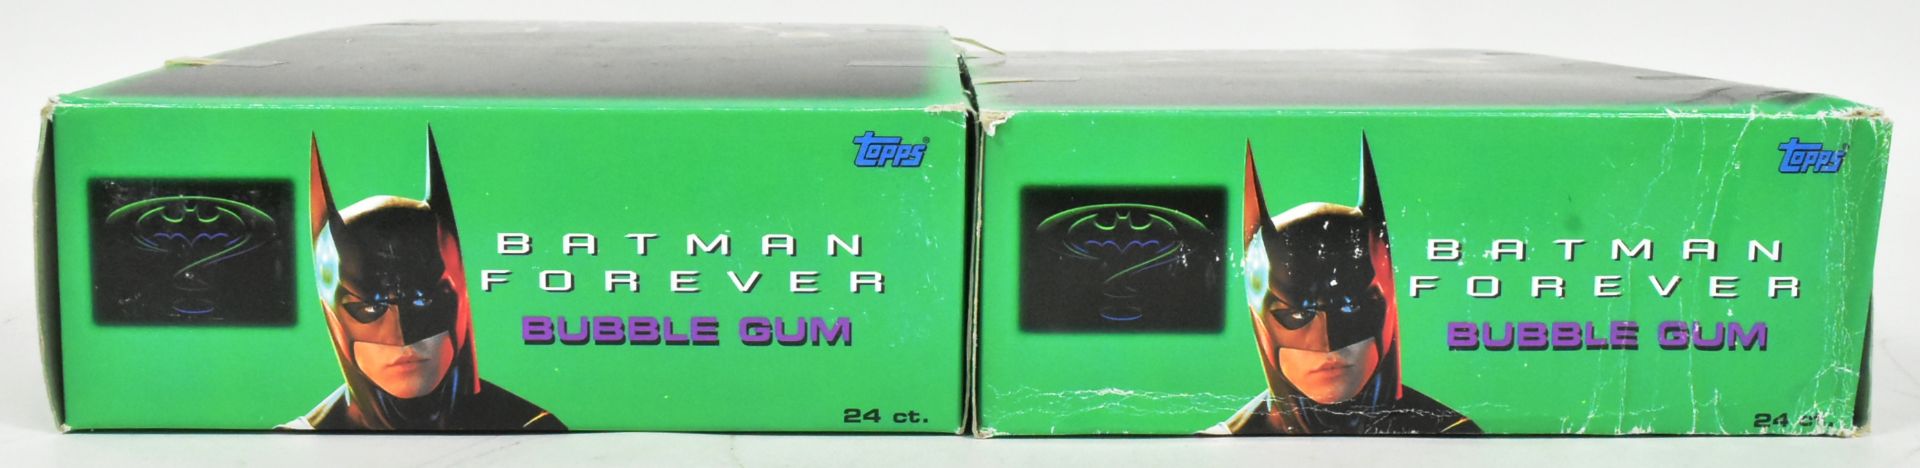 BATMAN FOREVER - VINTAGE NOS TOPPS BUBBLEGUM COUNTER BOXES - Image 5 of 5